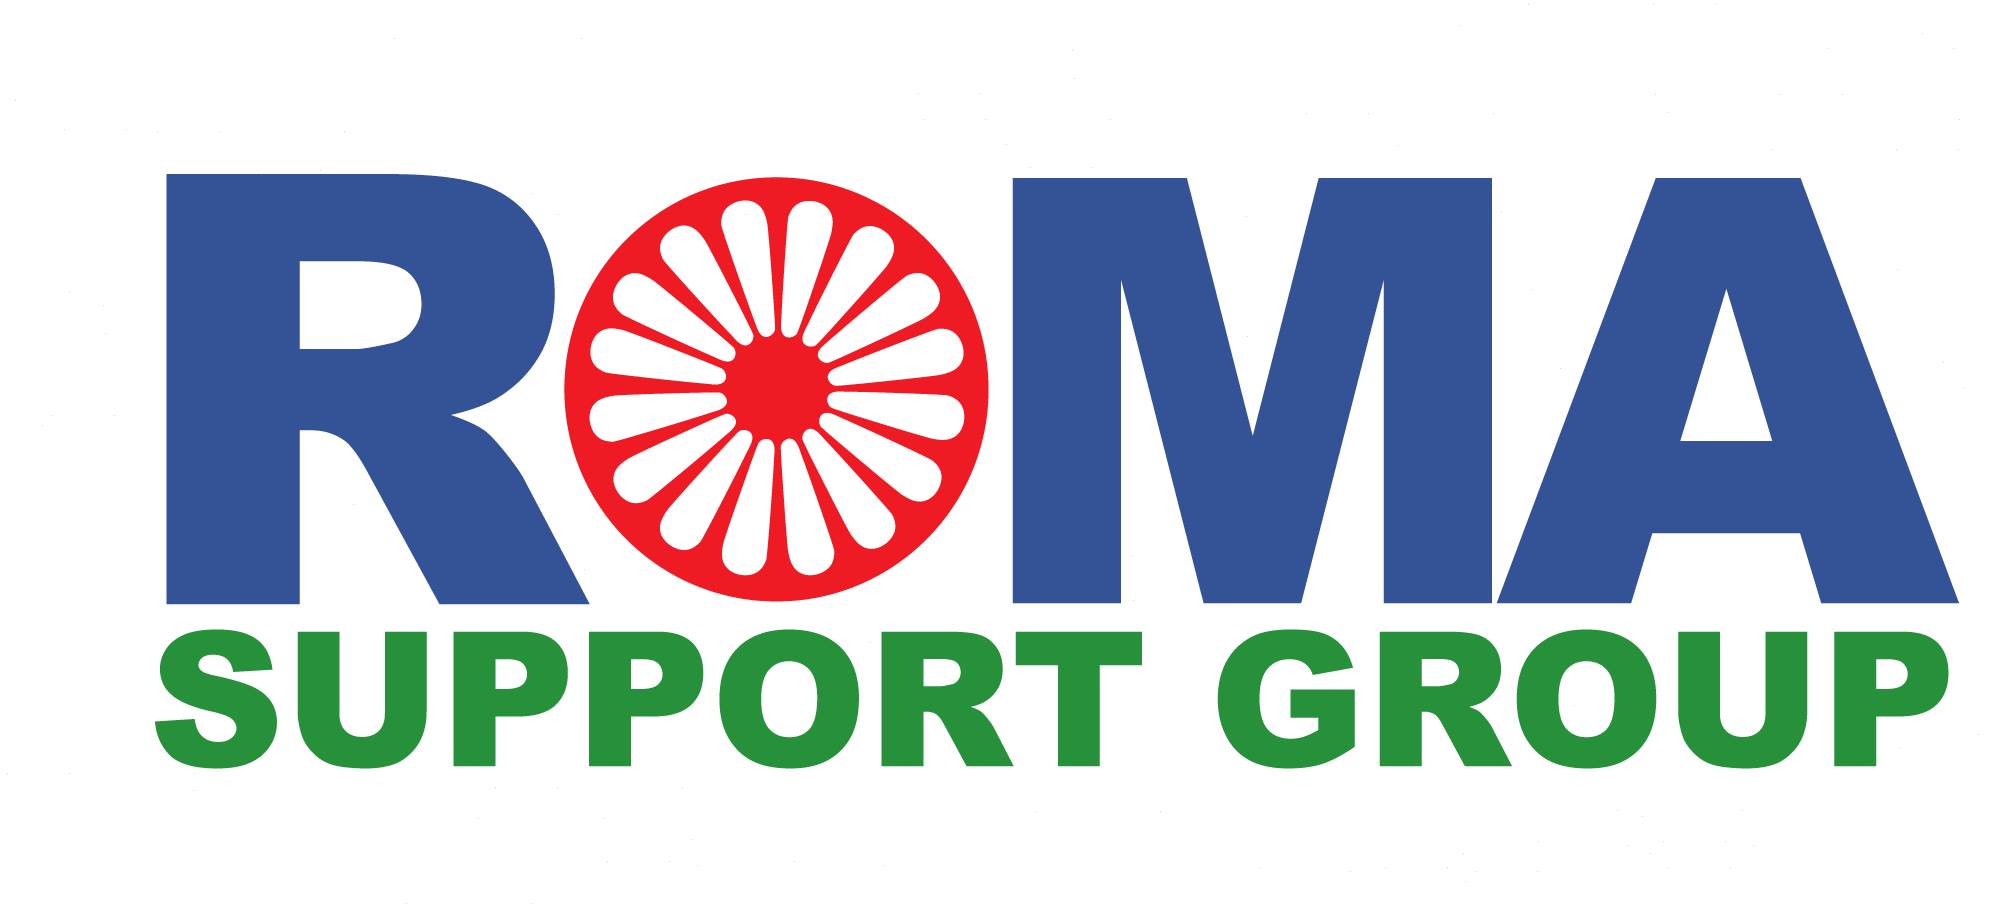 Roma Sports Group